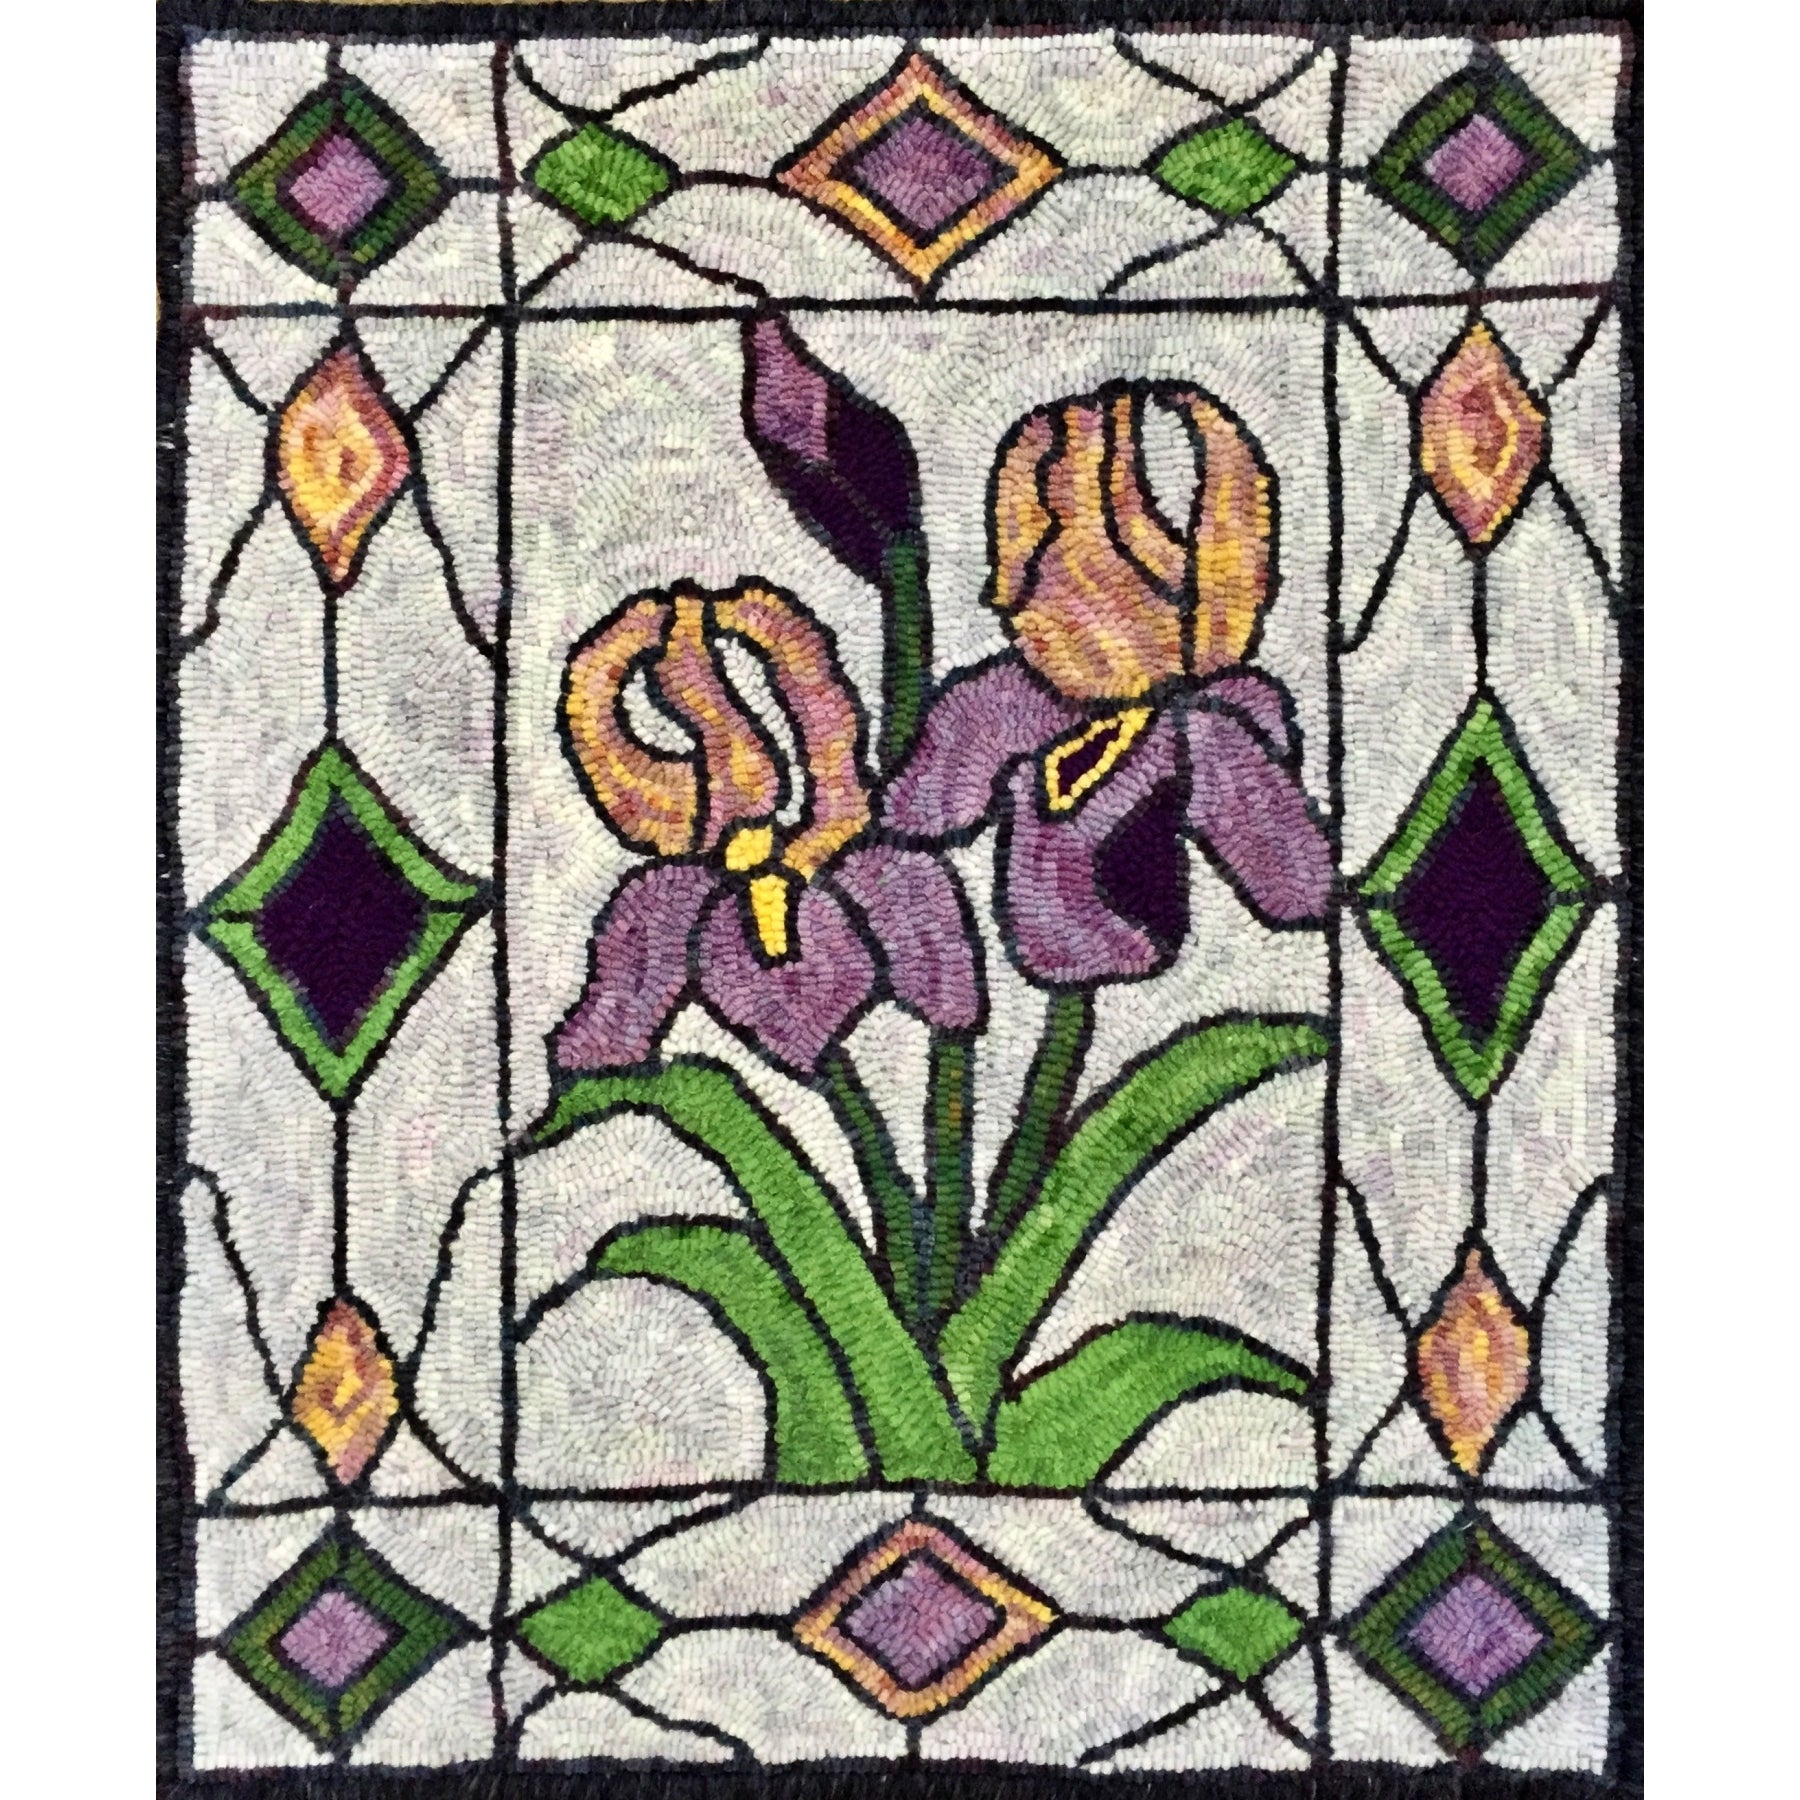 Iris Mosaic, rug hooked by Margaret Bedle